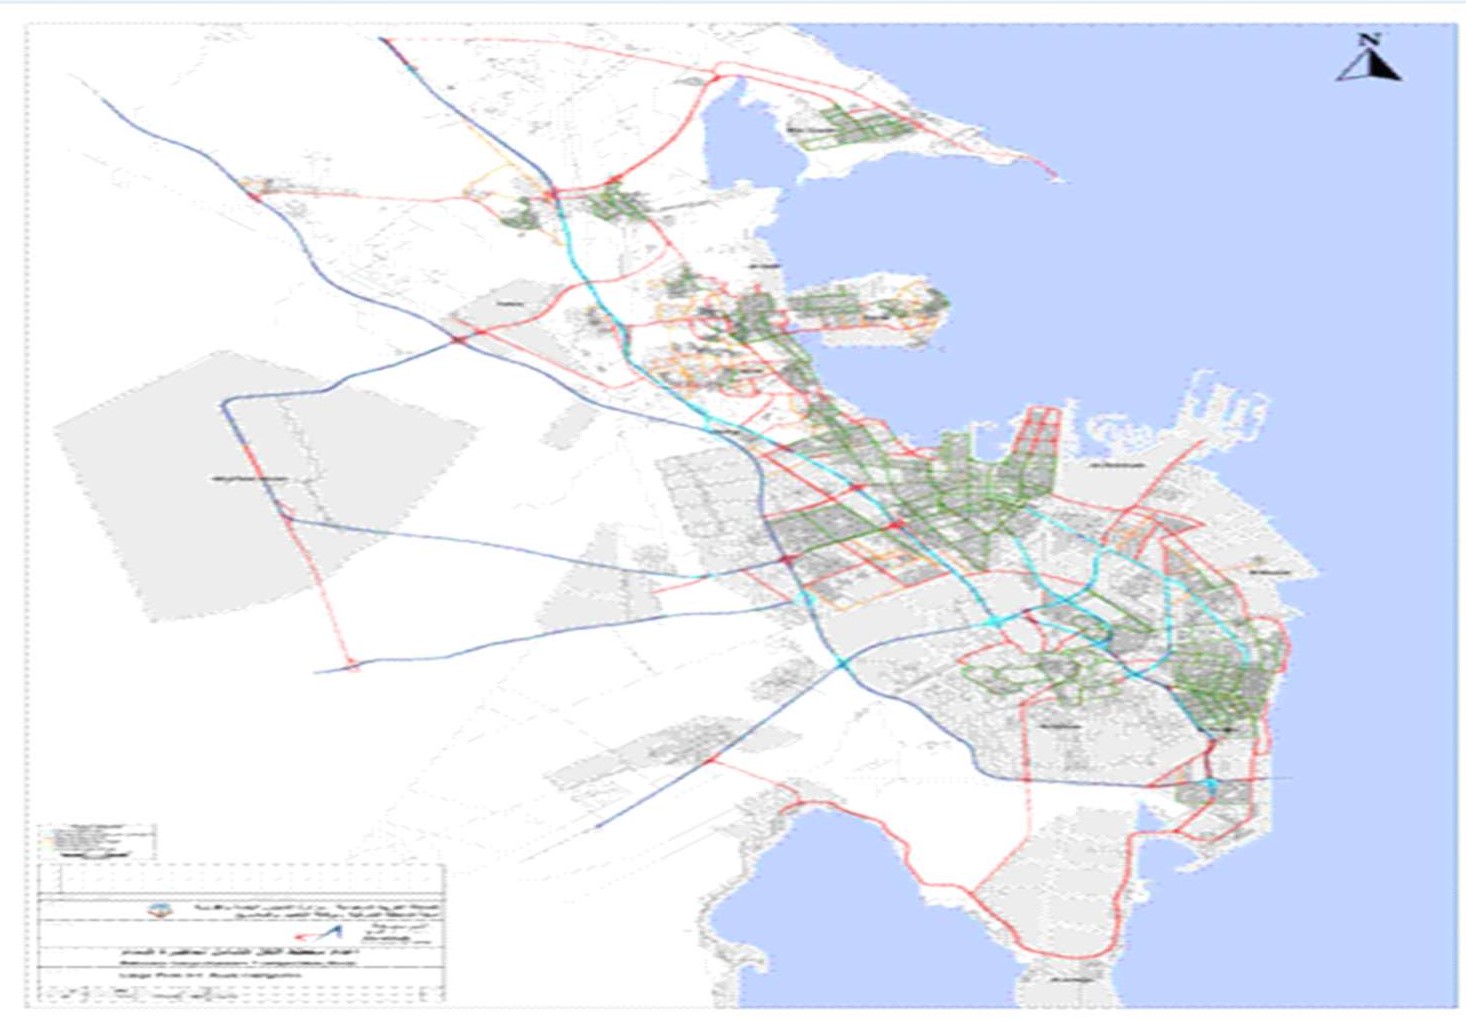 Dammam Comprehensive Transportation Study (DCTS) – Dammam Metropolitan Area